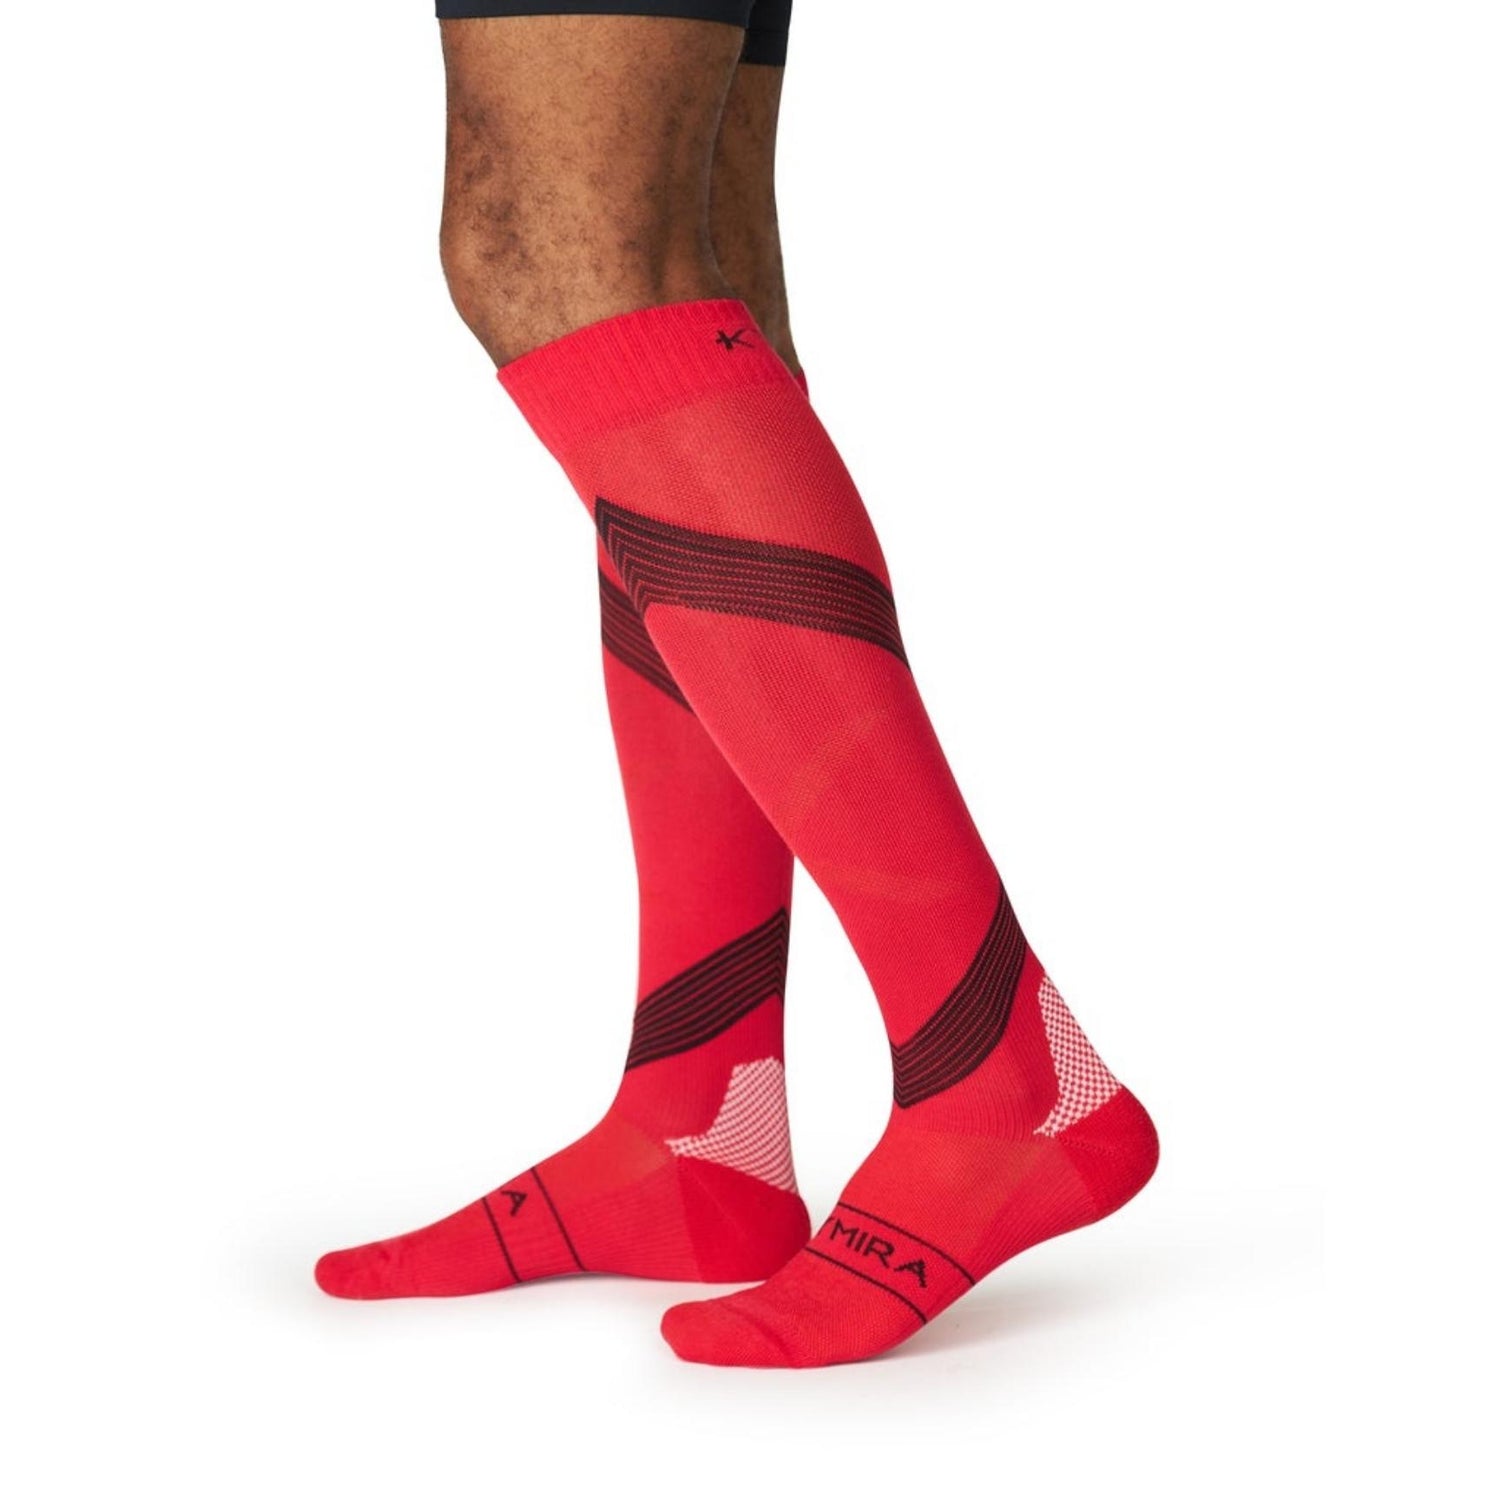 KYMIRA Infrared Compression Socks - Red/Black